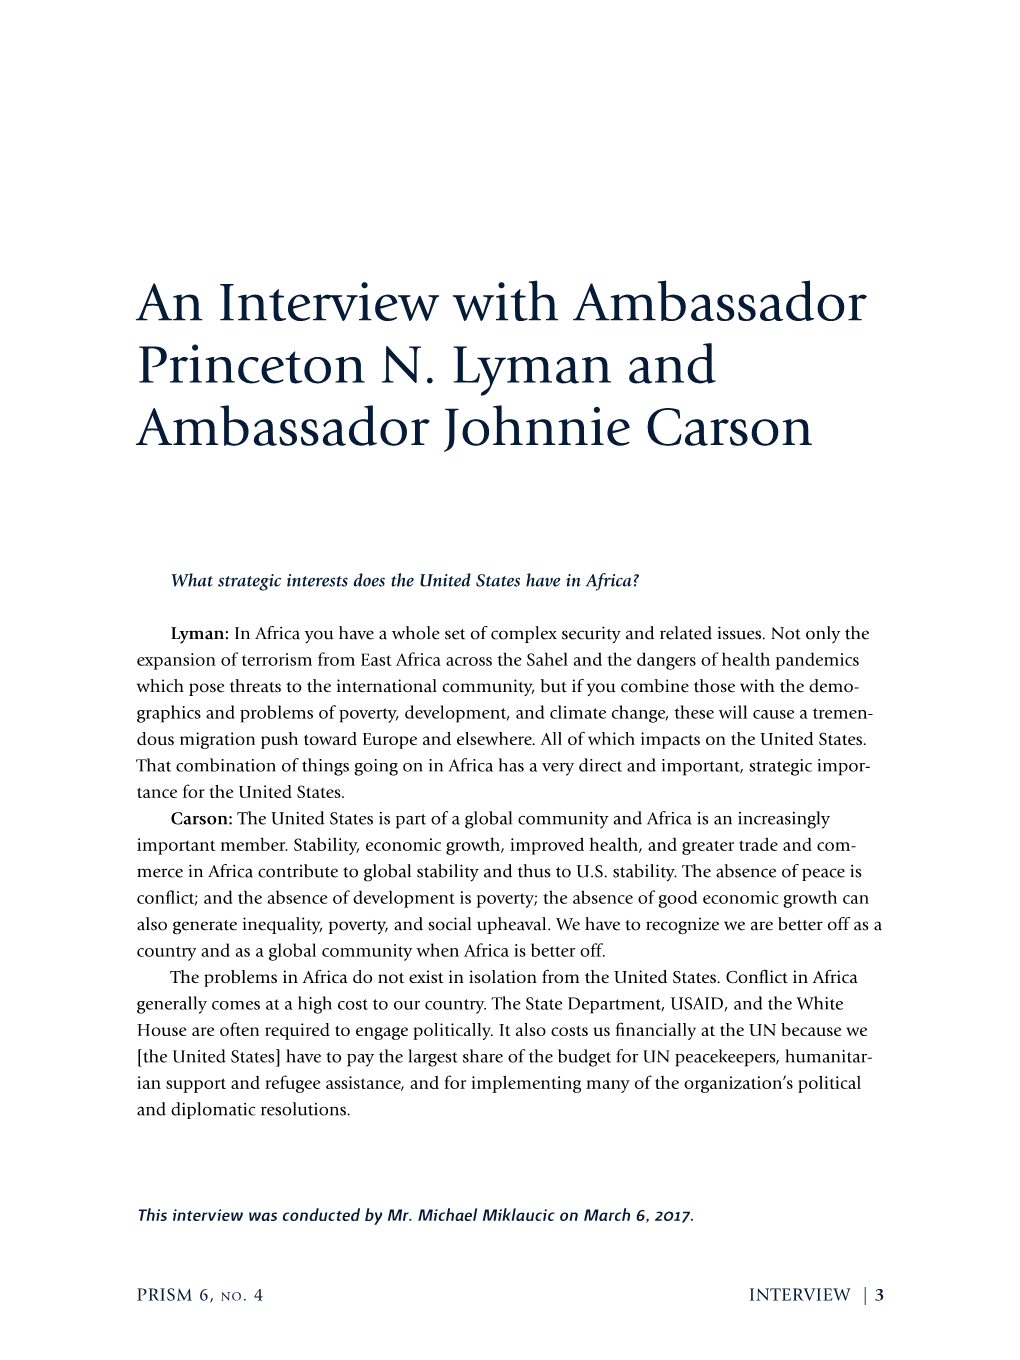 An Interview with Ambassador Princeton N. Lyman and Ambassador Johnnie Carson